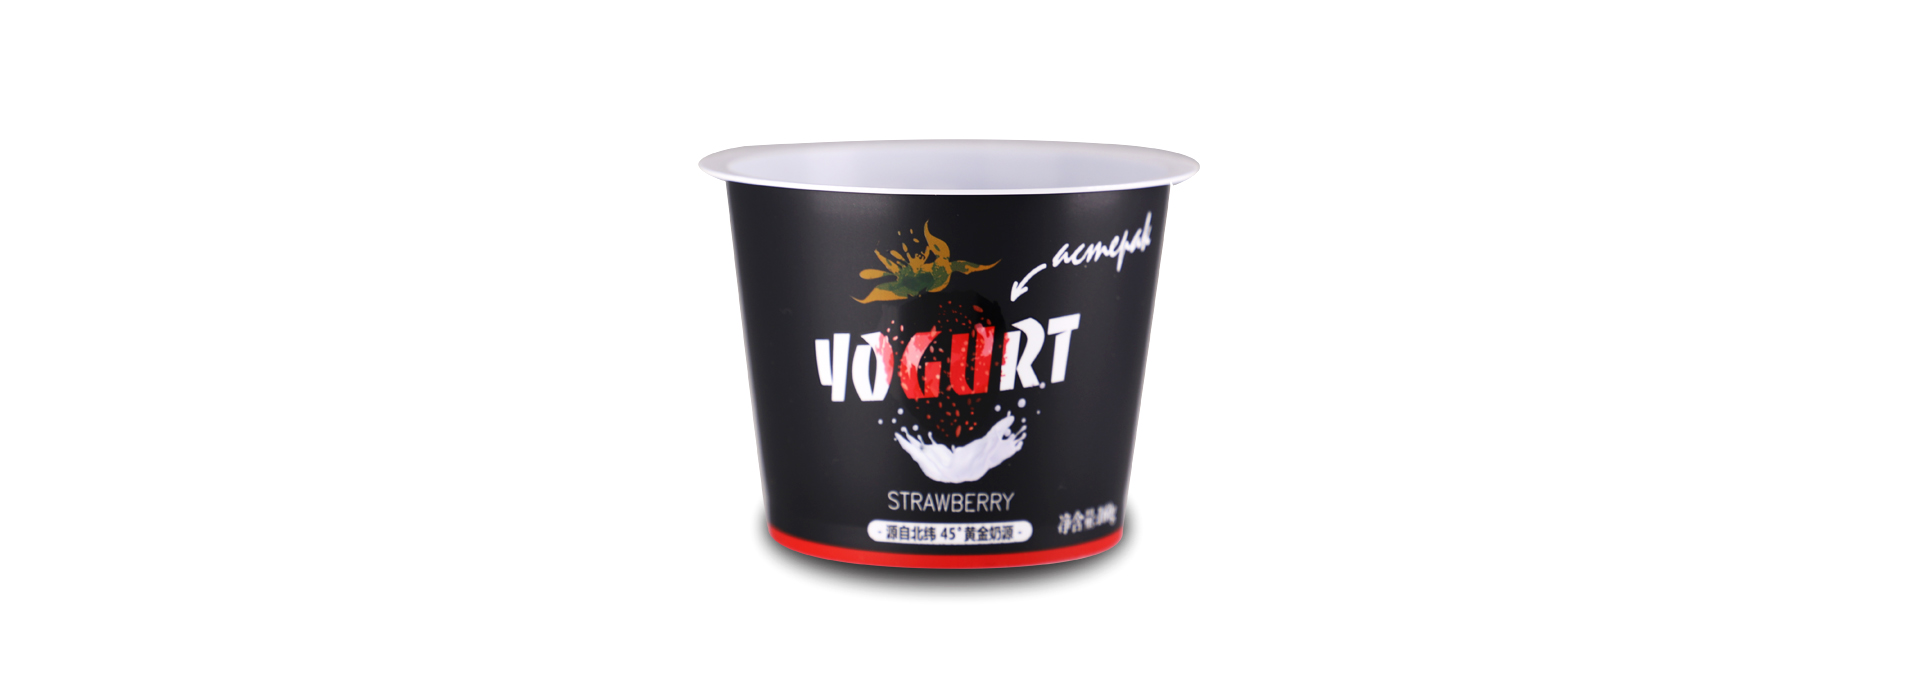 160g yogurt cup (88 caliber)